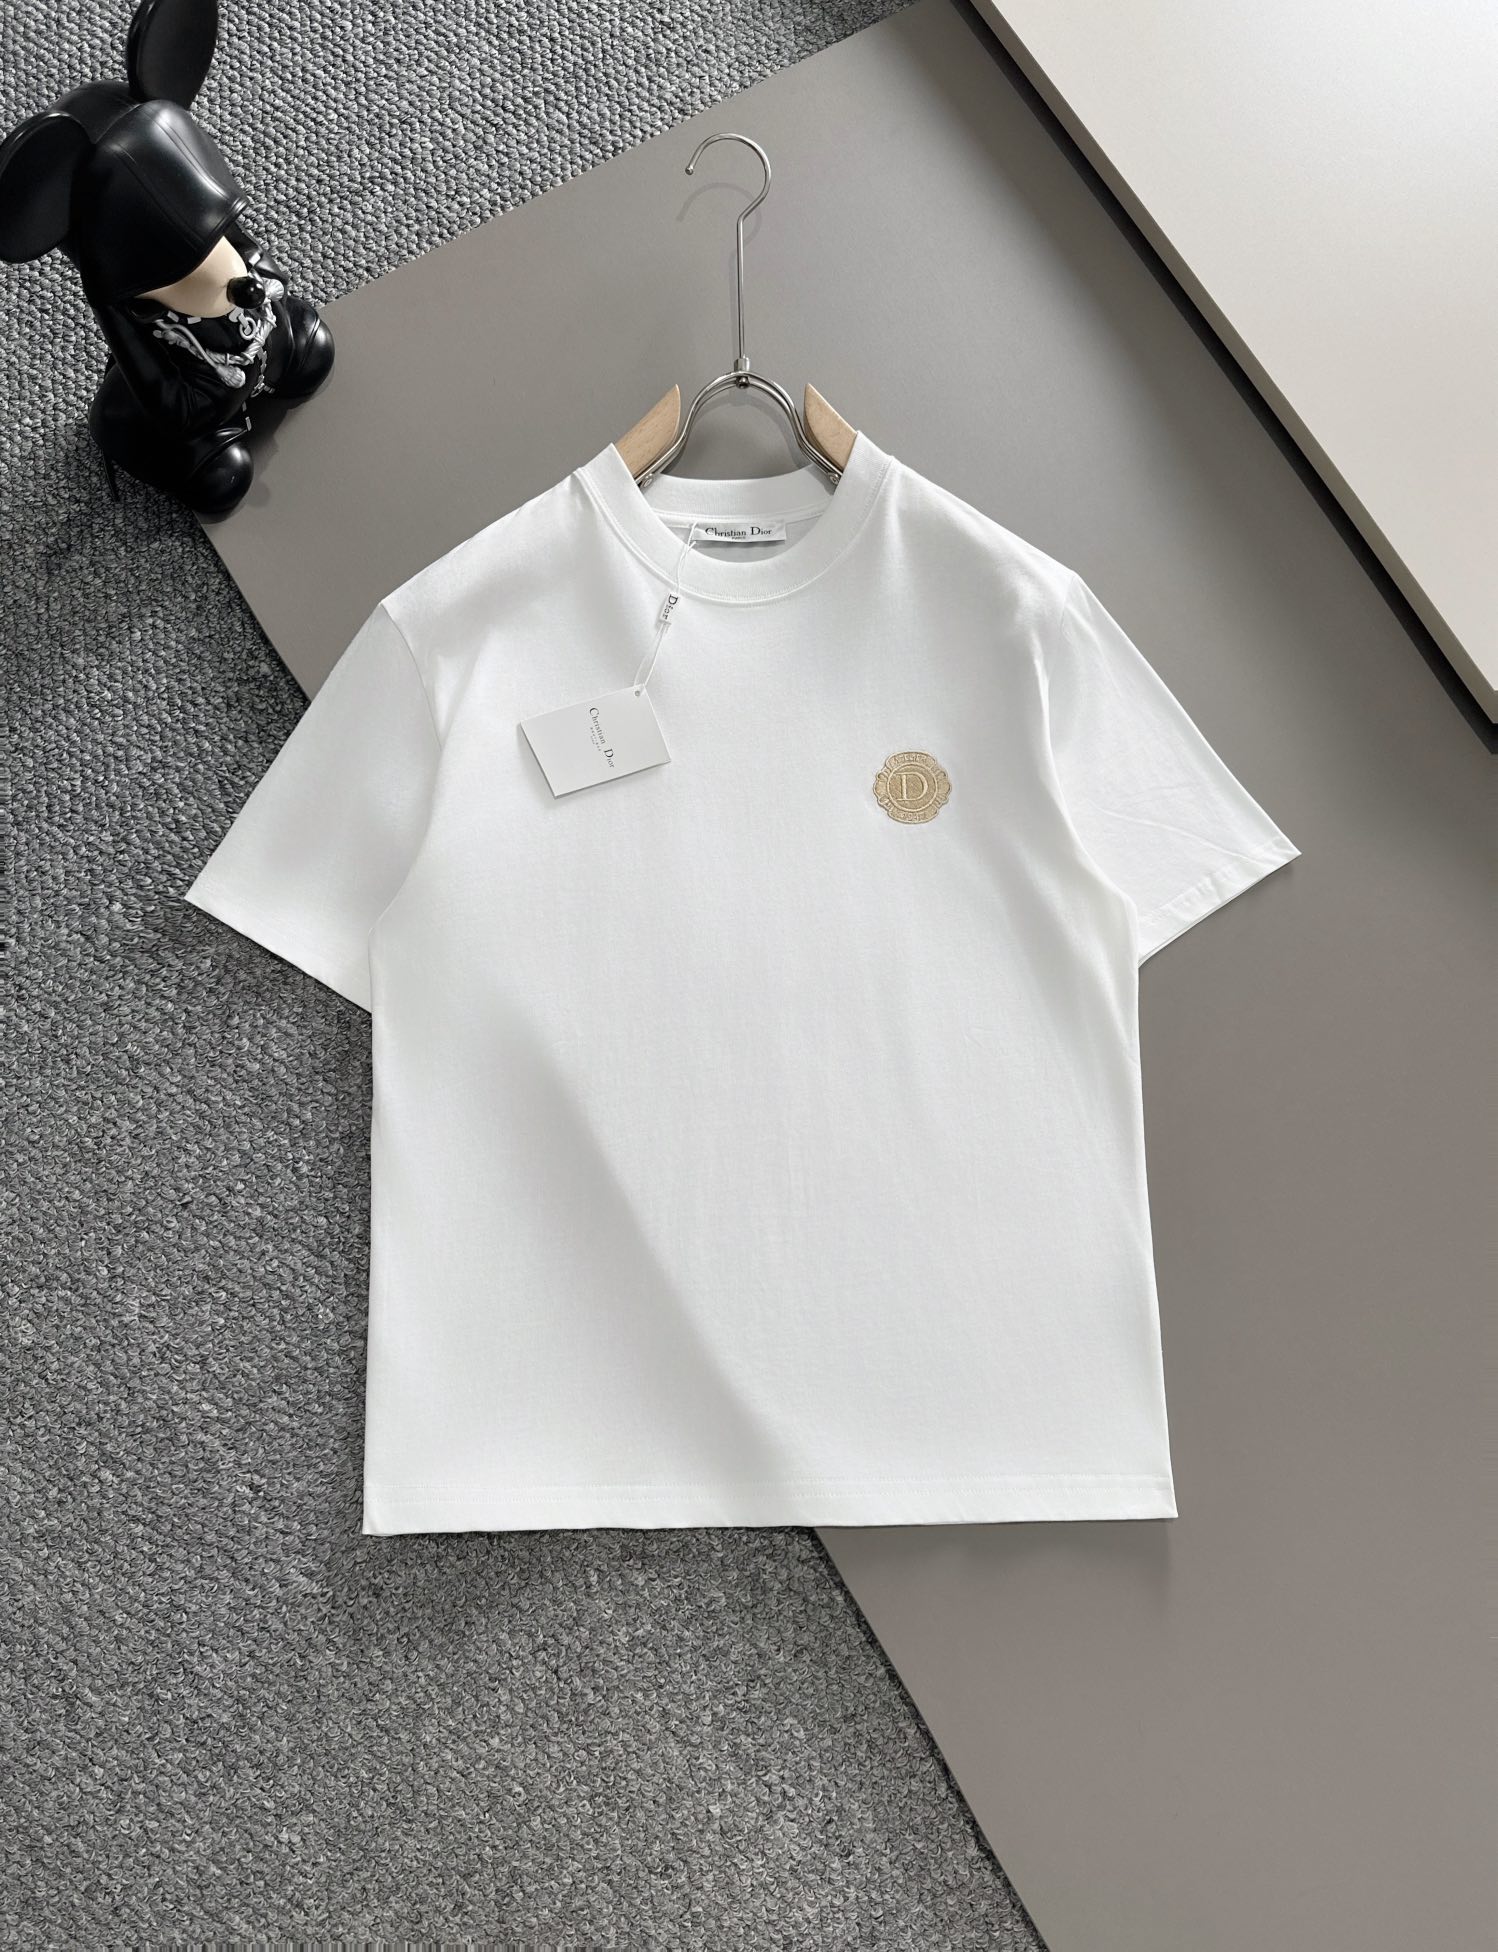 Dior Clothing T-Shirt Black White Embroidery Cotton Fashion Short Sleeve